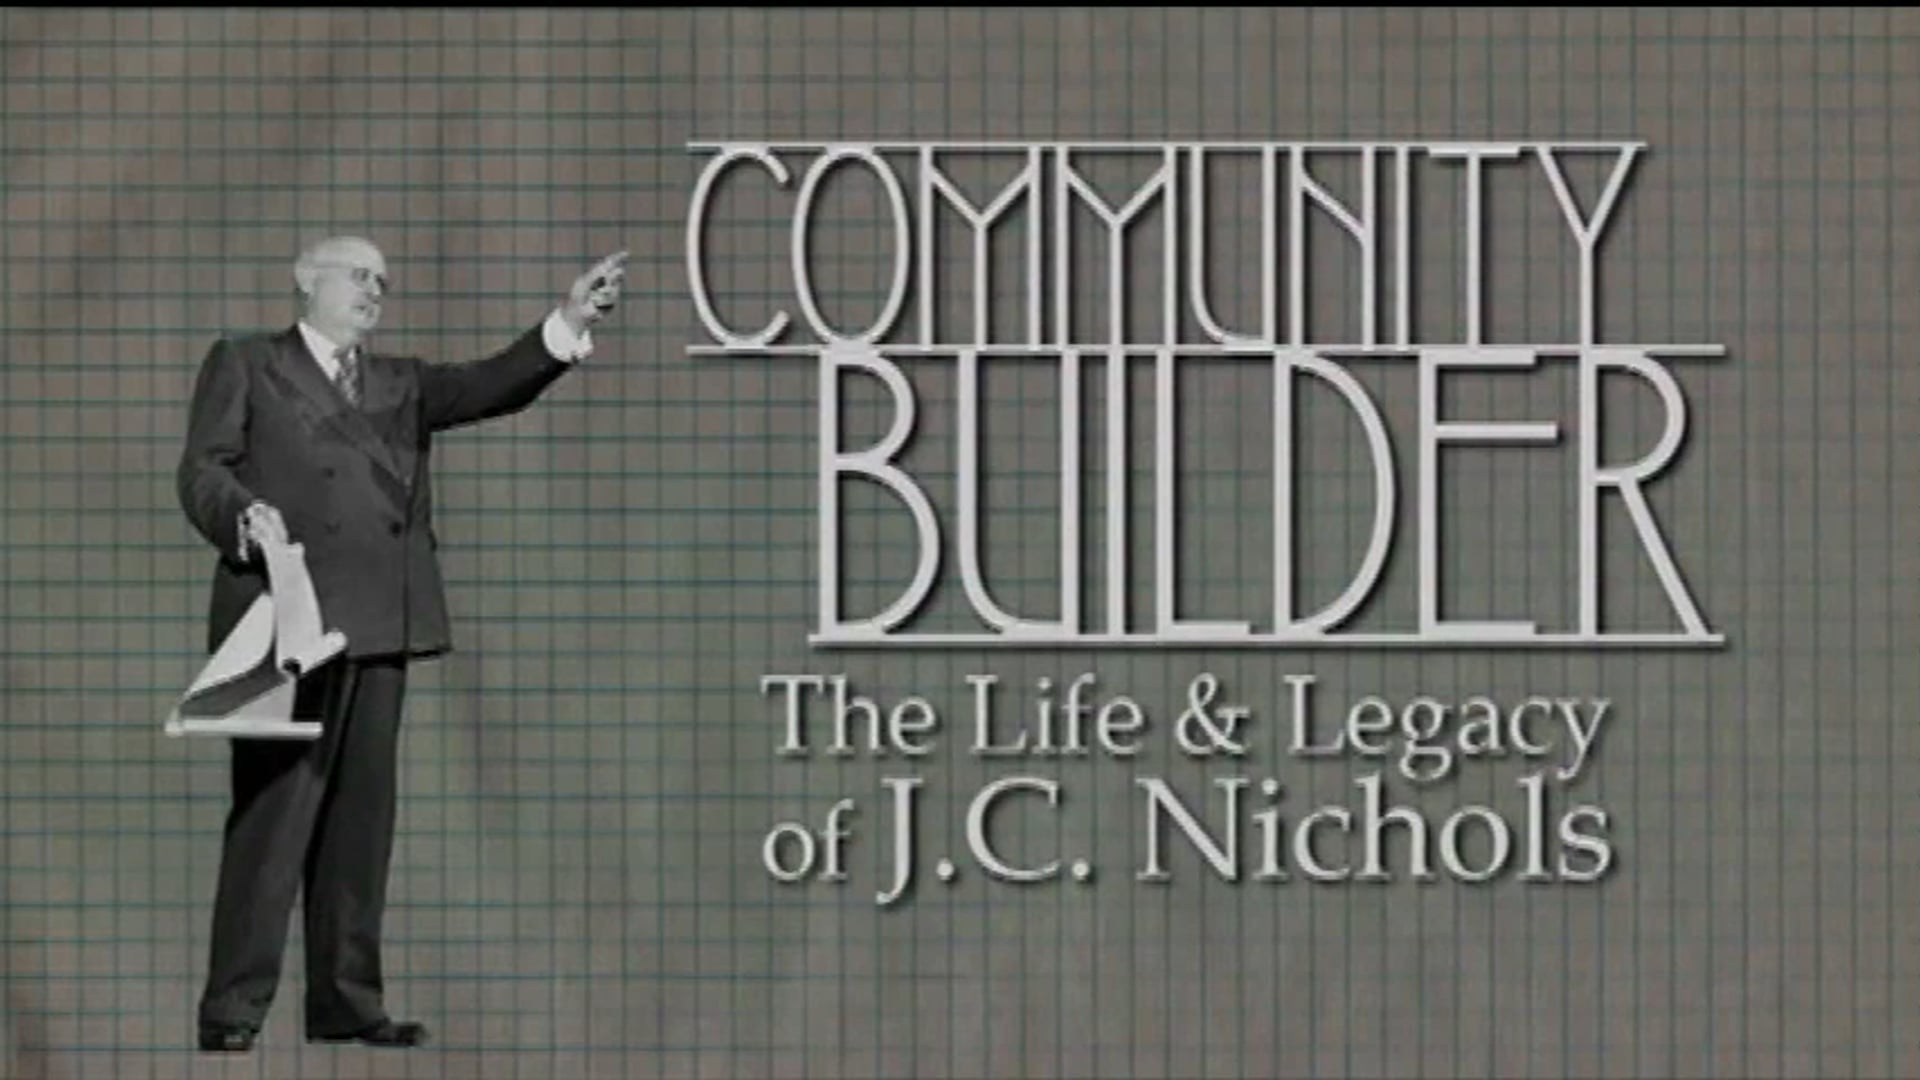 Community Builder: The Life & Legacy of J.C. Nichols